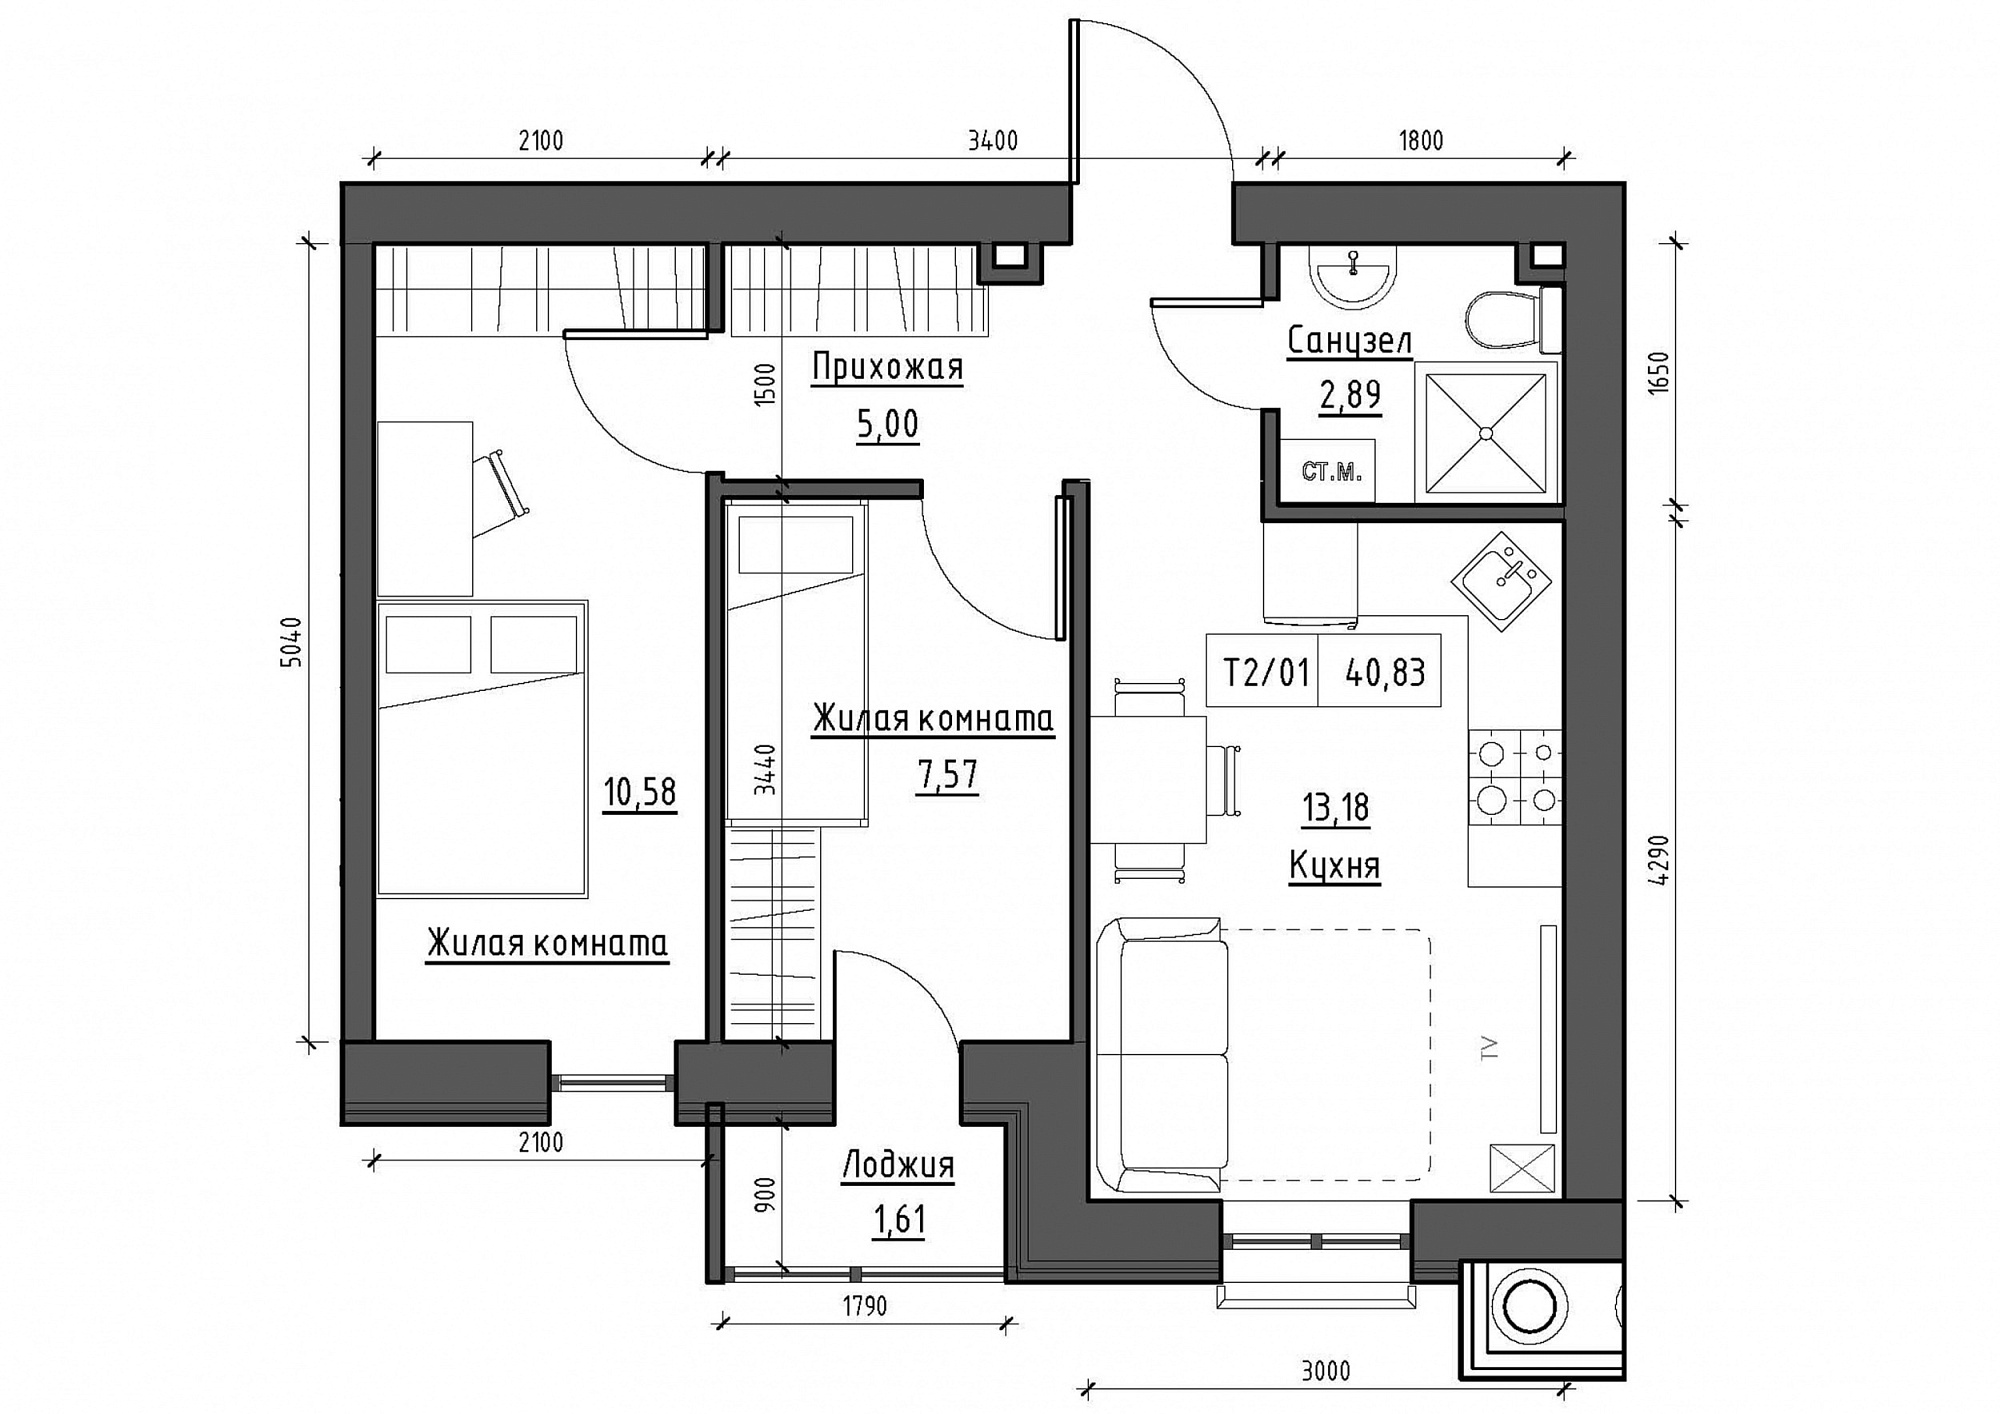 Planning 2-rm flats area 40.83m2, KS-011-01/0011.